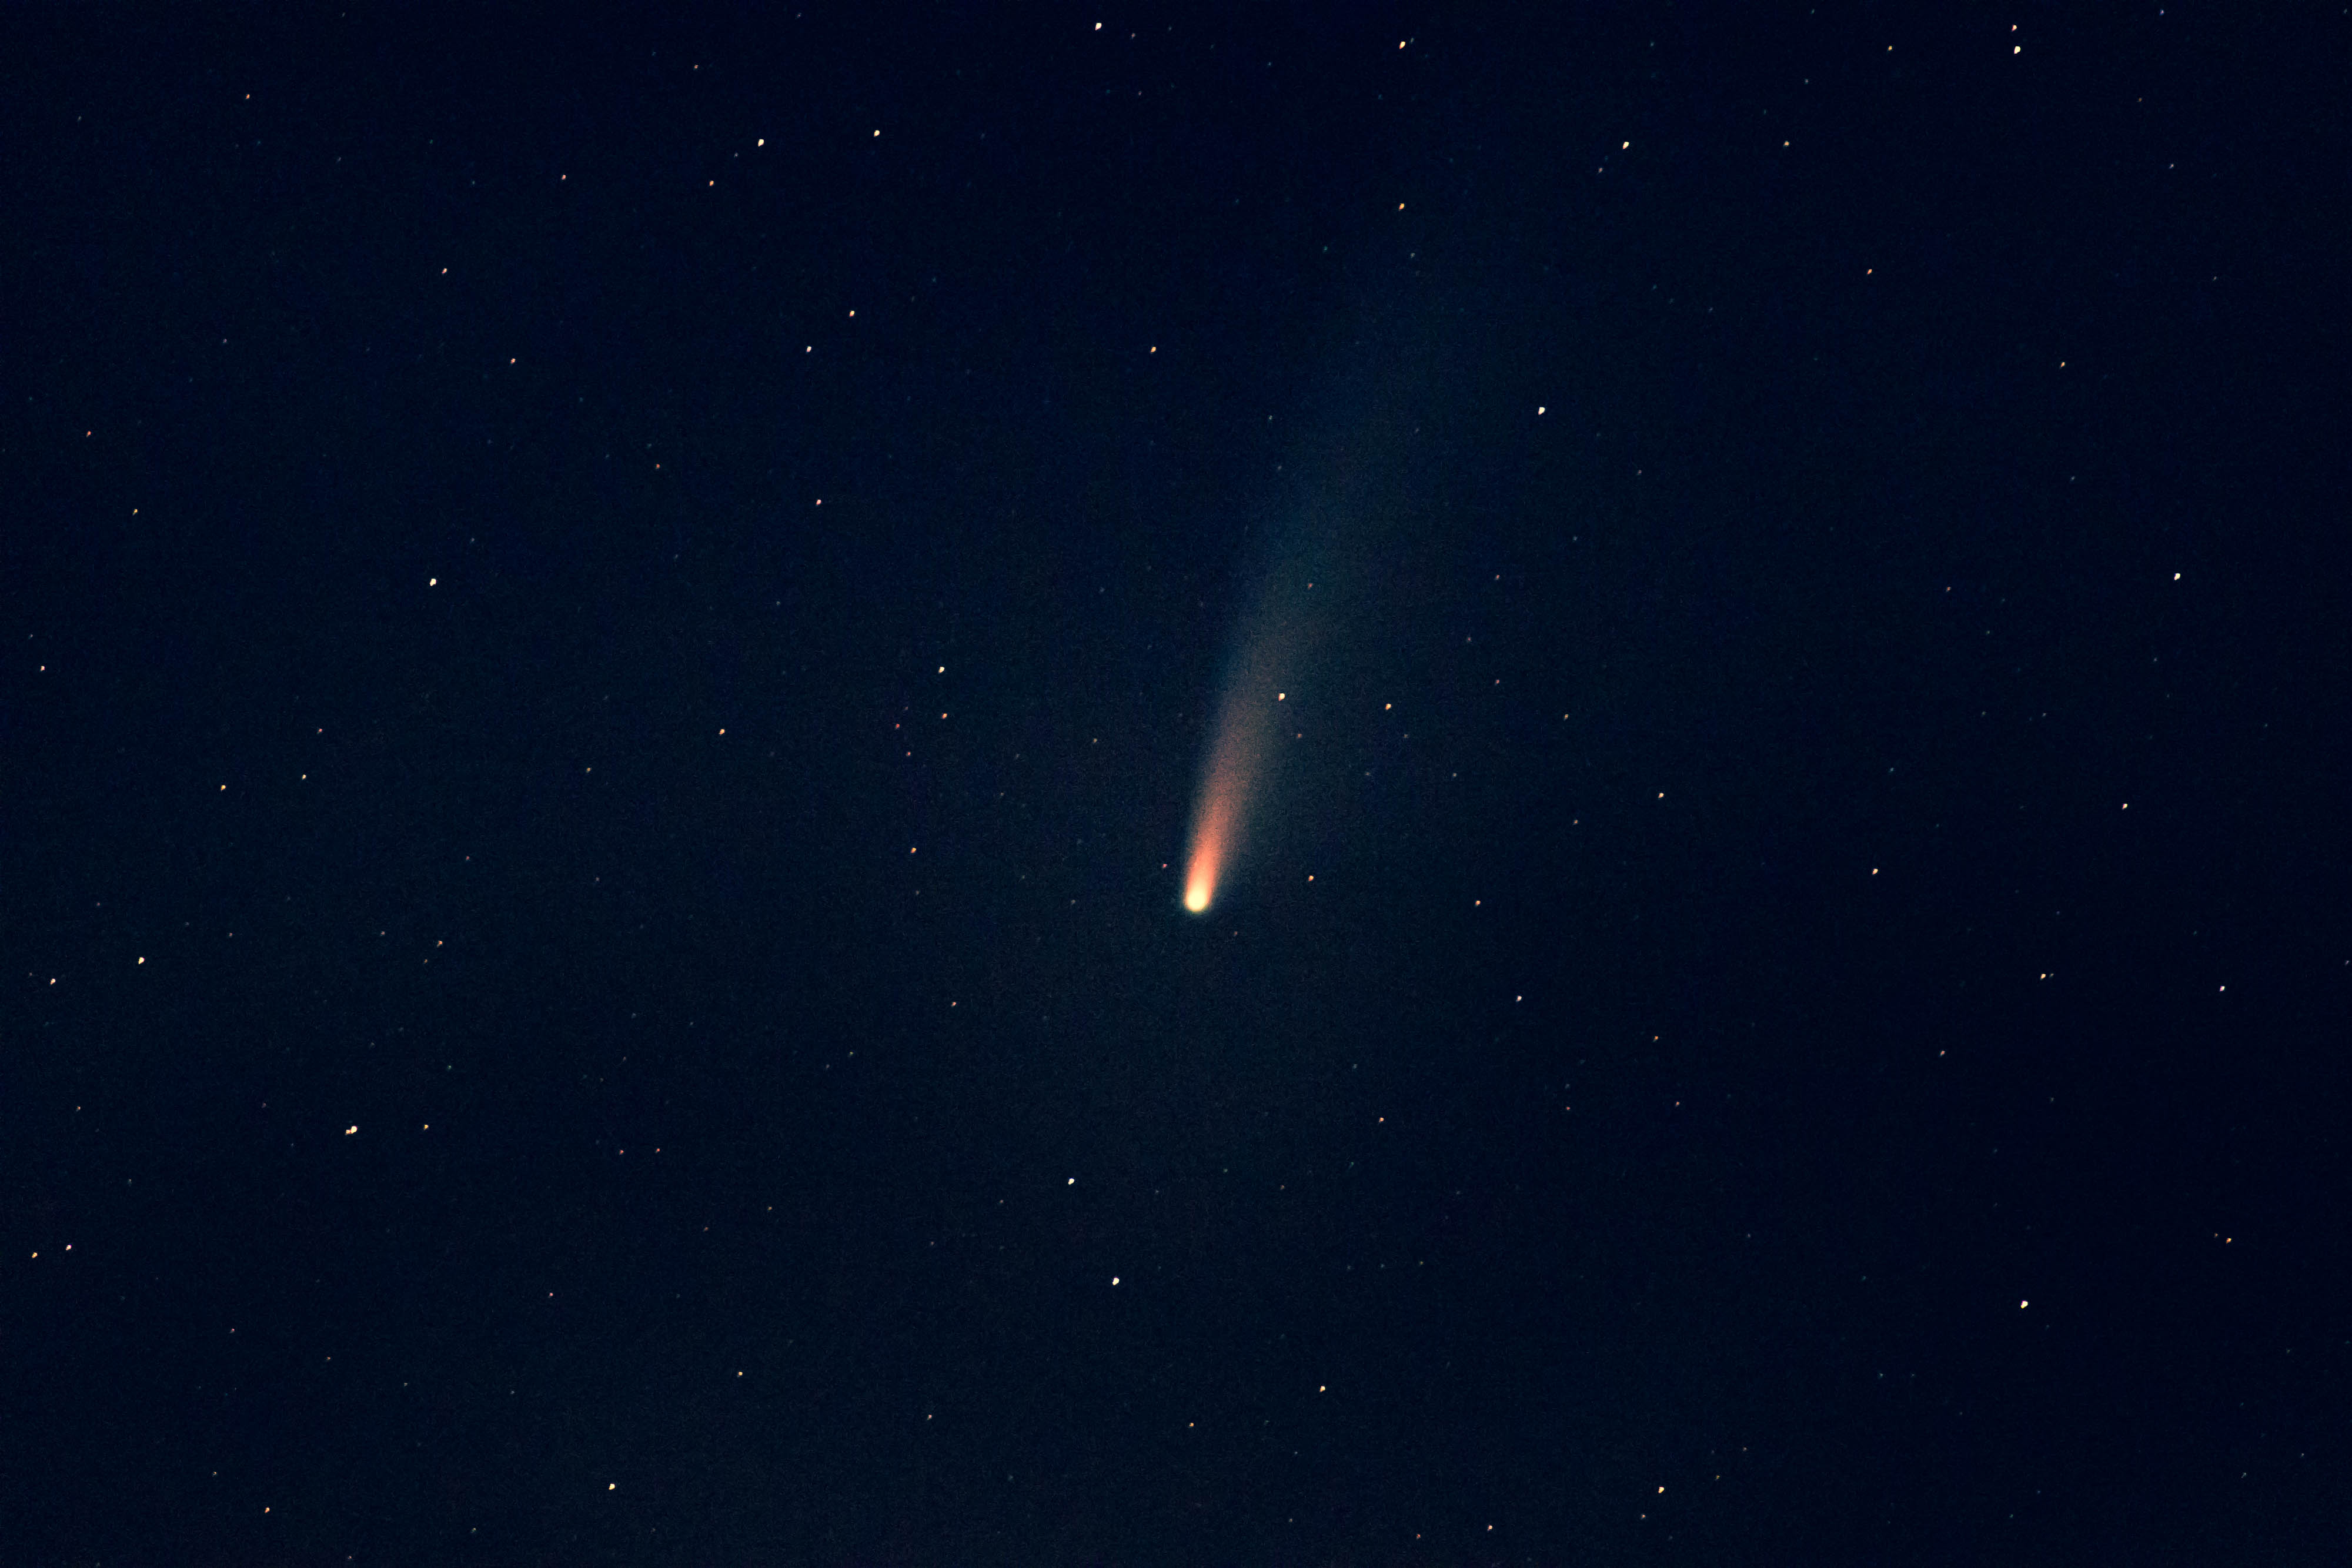 Comet falling through the night sky